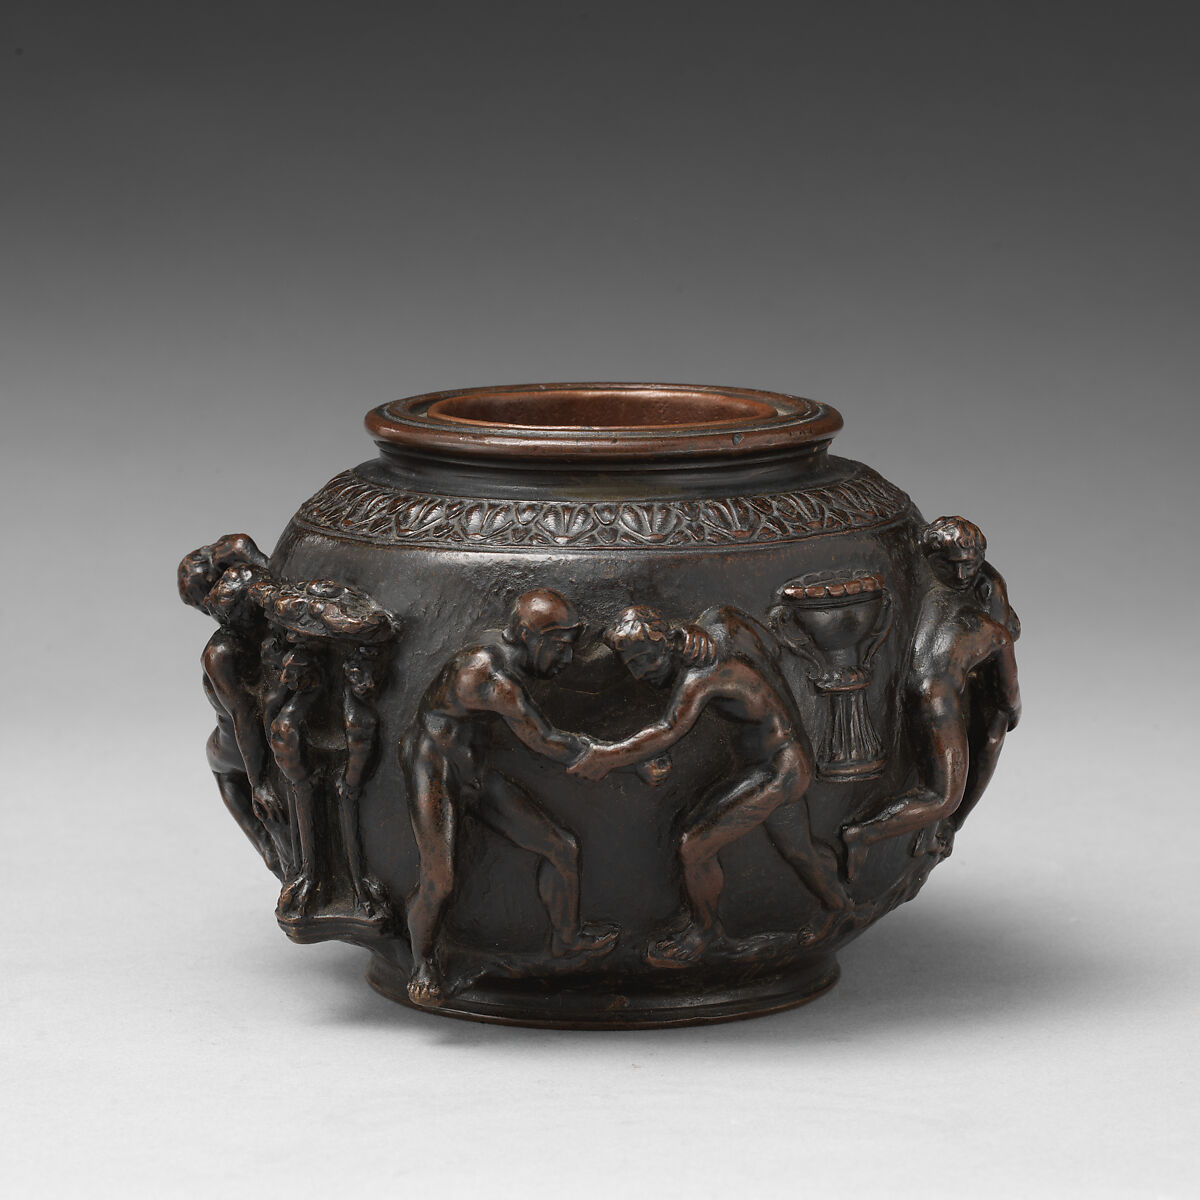 Vase with scenes of wrestling, Bronze, possibly Italian 